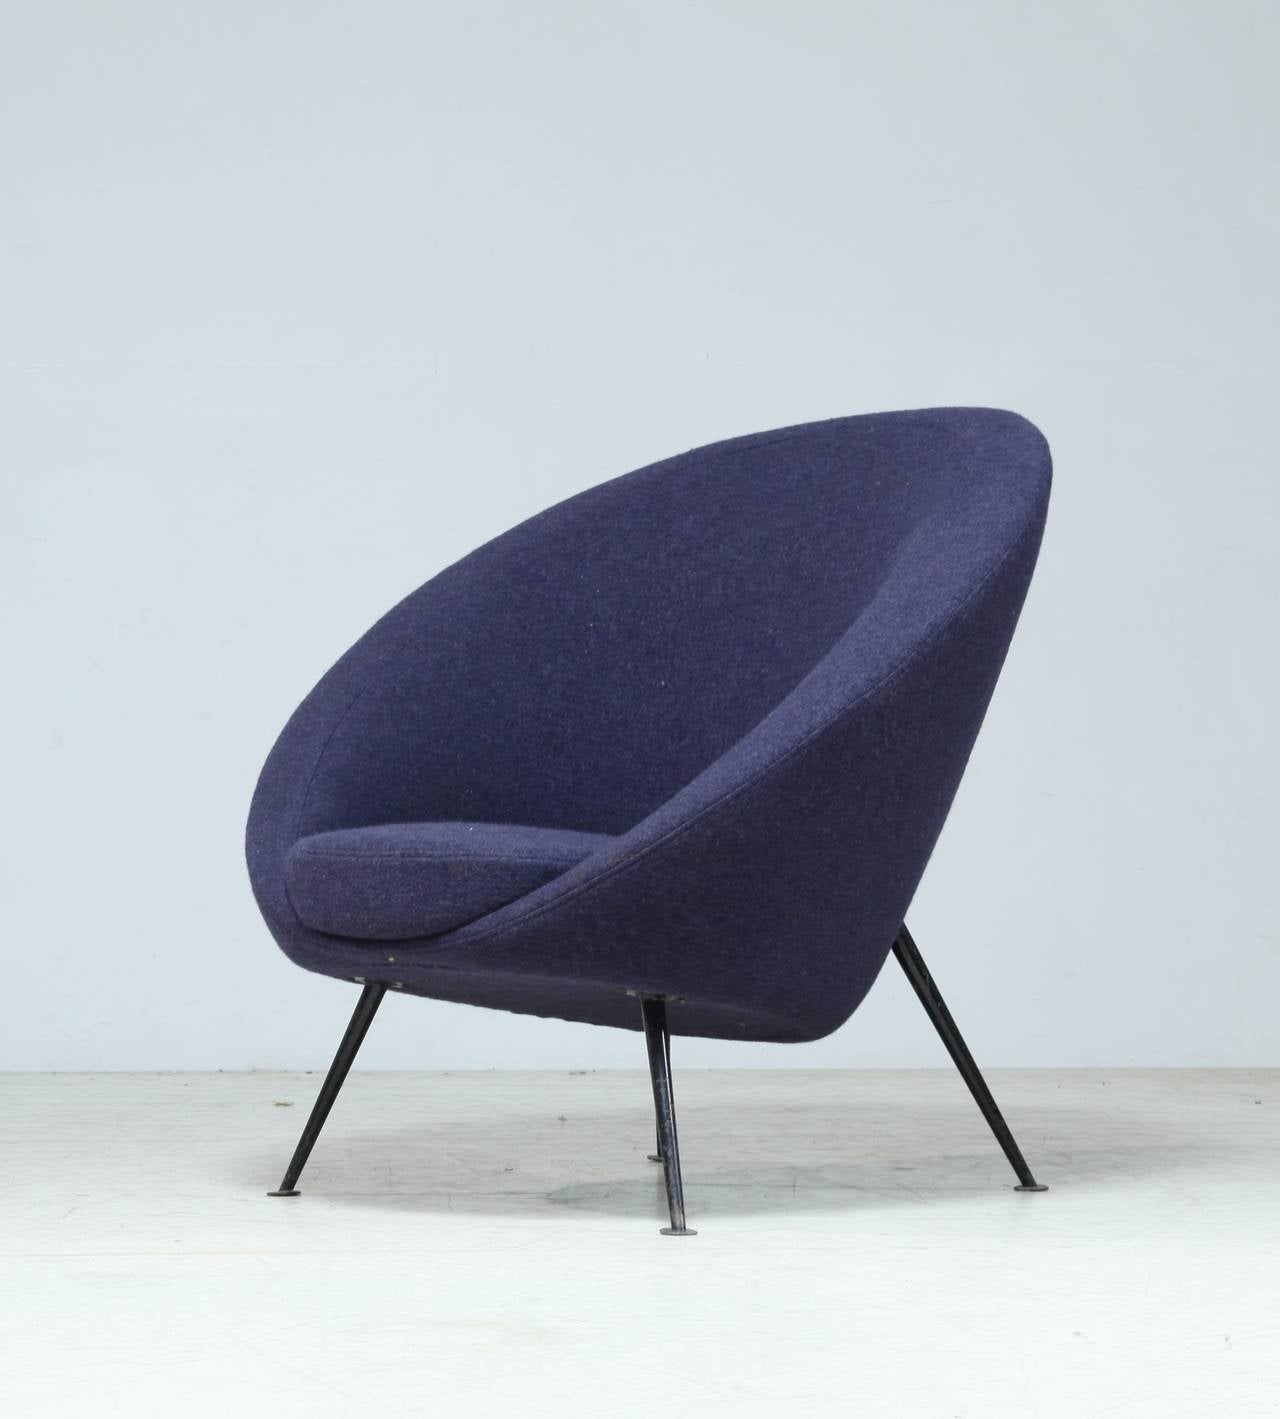 upholstered egg chair -china -b2b -forum -blog -wikipedia -.cn -.gov -alibaba